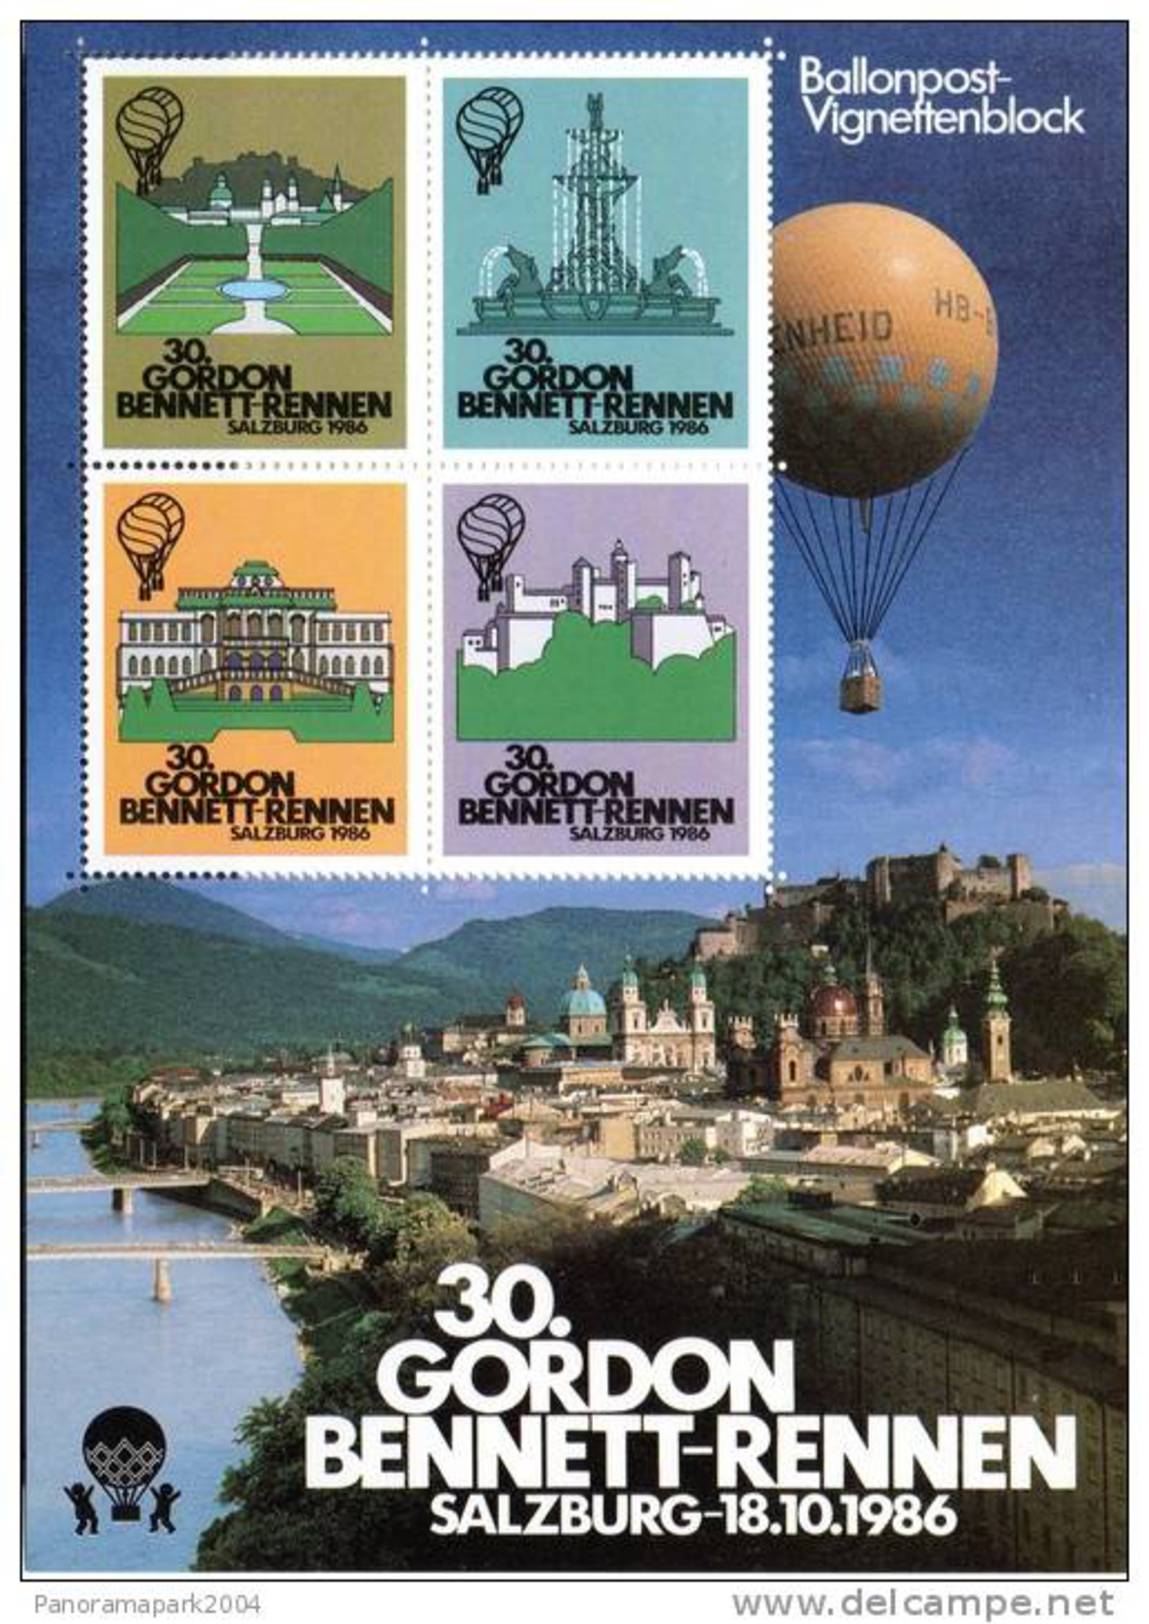 30. Gordon Bennett Rennen Salzburg 18.10.1986 Österreich Vignettenblock Ballonpost Heißluftballon - Balloon Covers